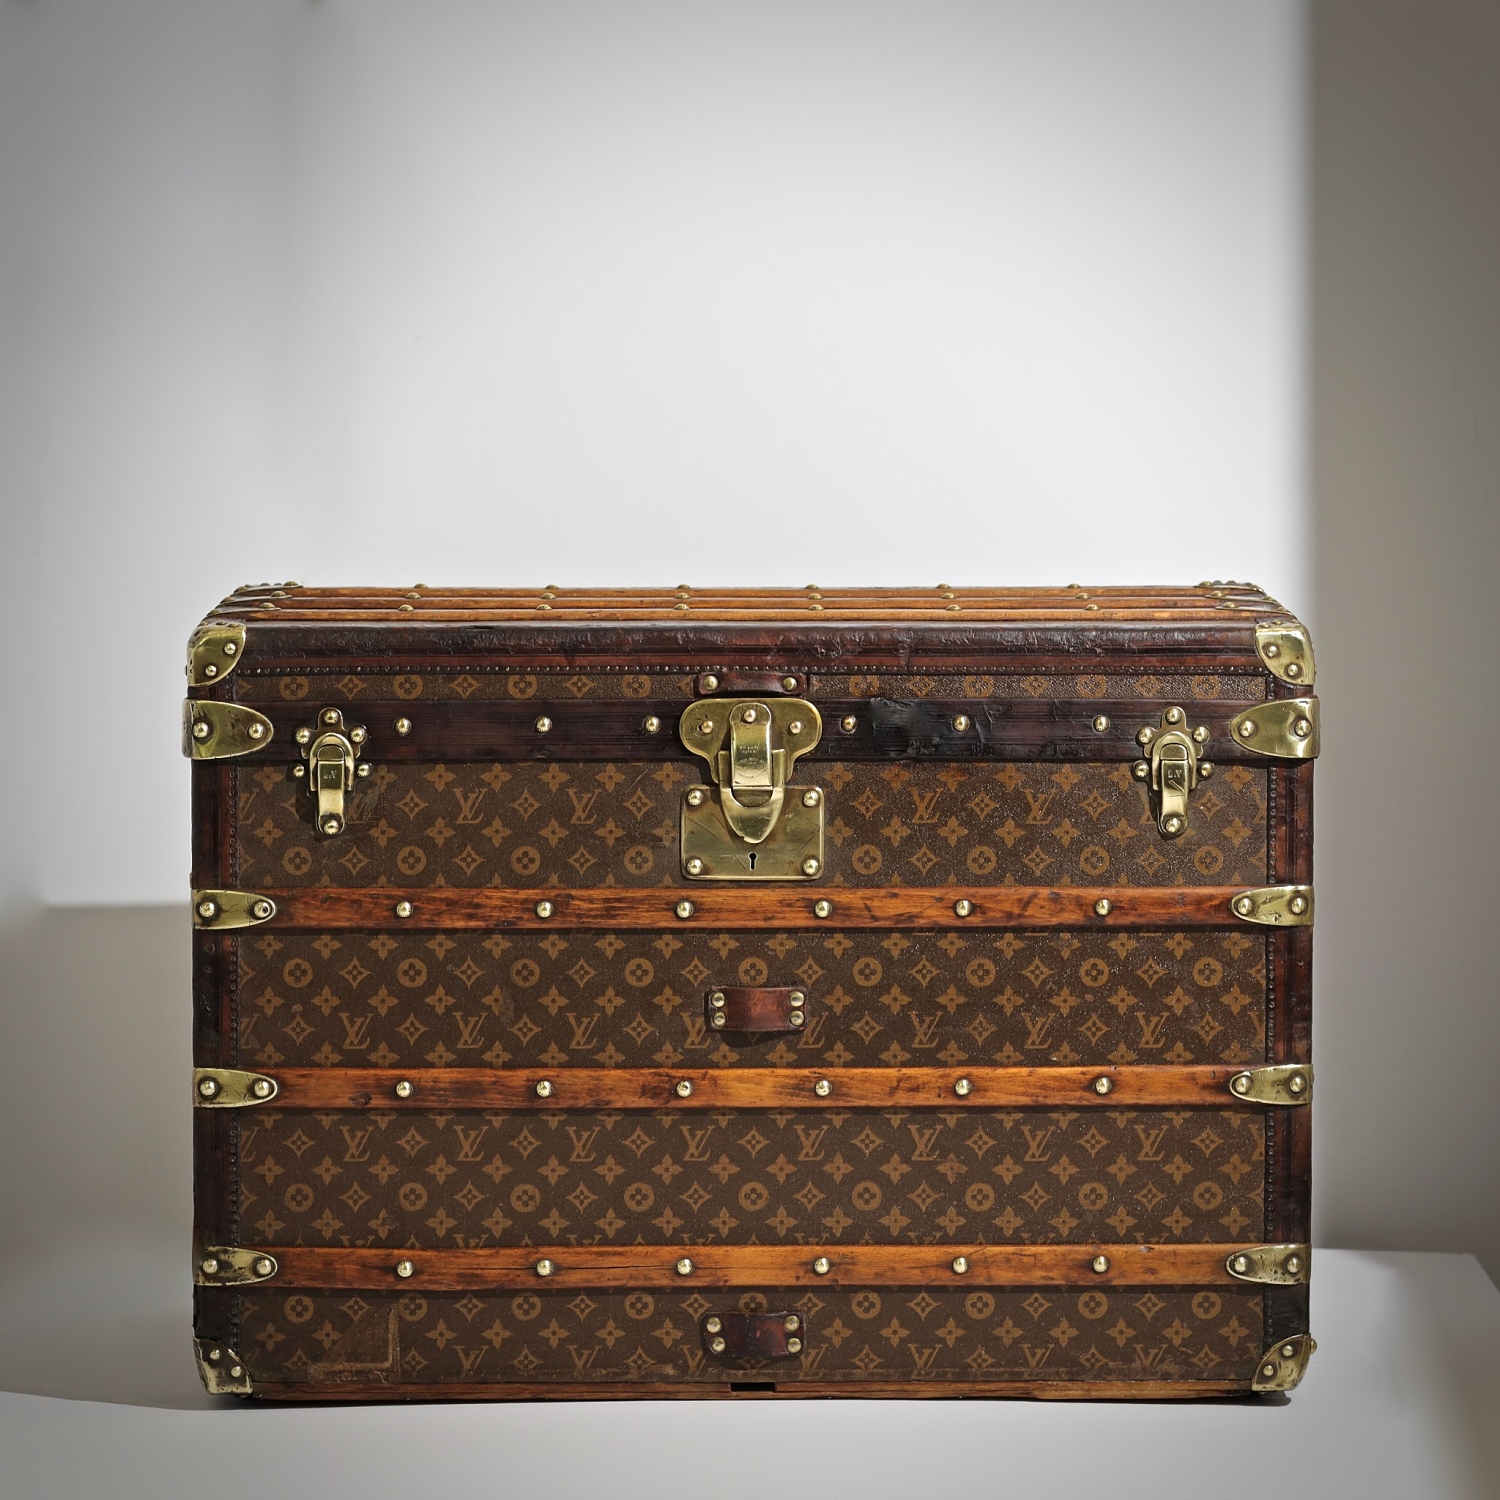 Show of Vintage Louis Vuitton Trunks Brings Time Travel to Sofitel